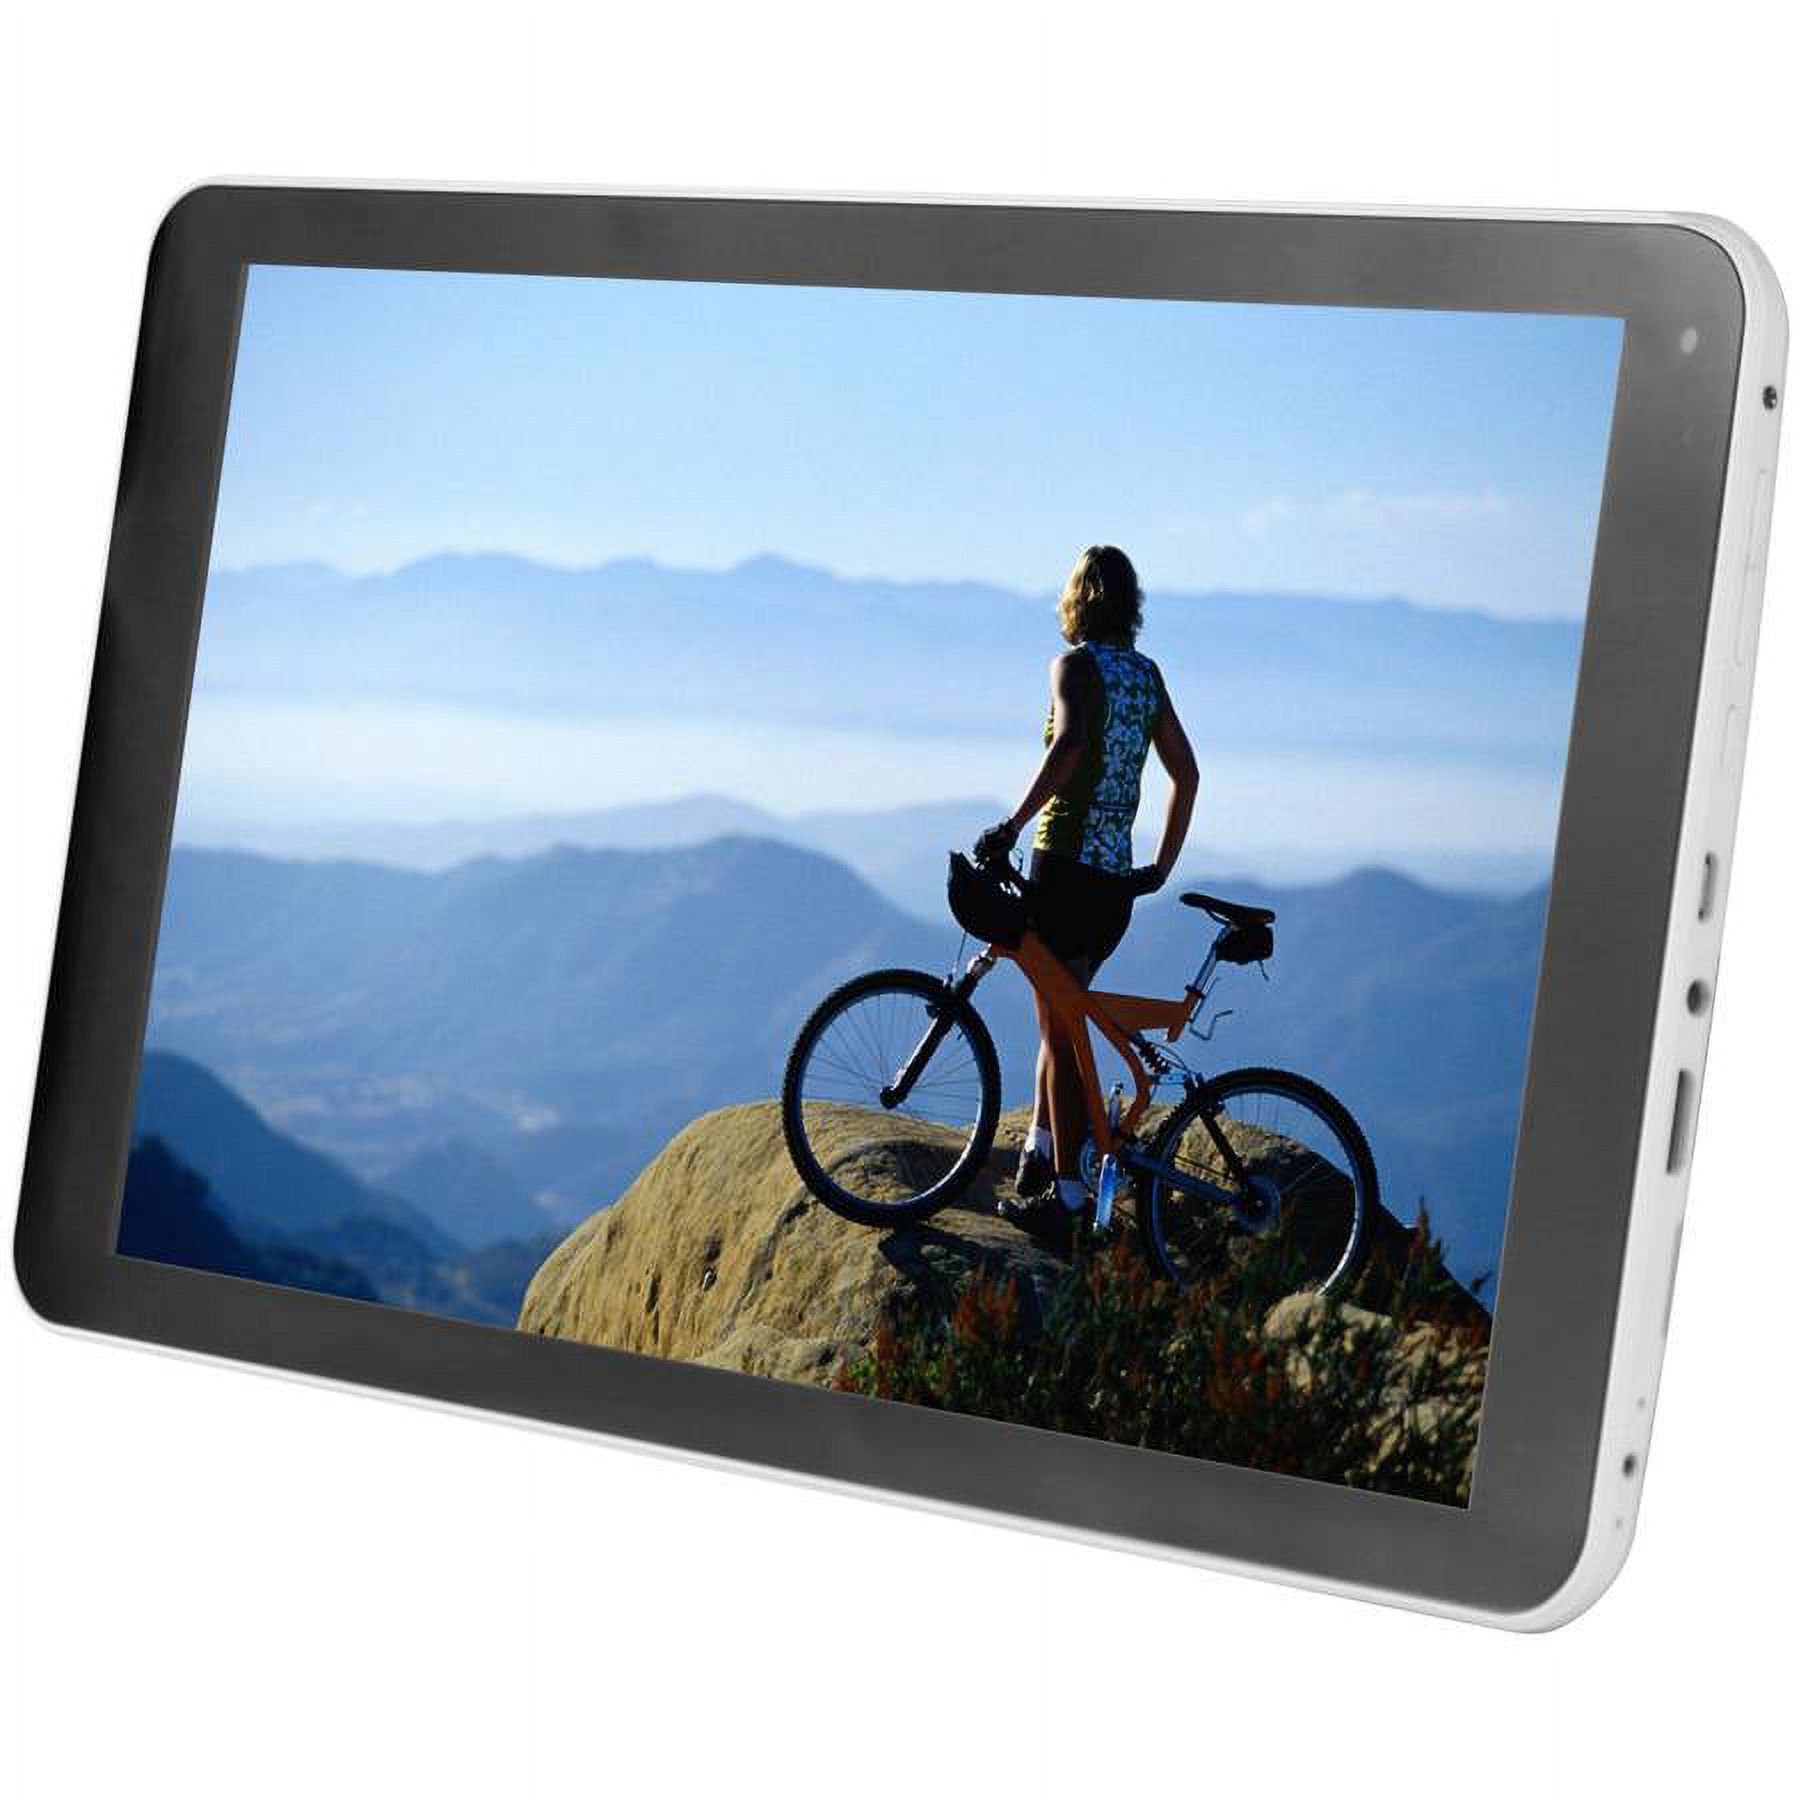 ANTM REVO-1008 - Tablet - Android 4.4 (KitKat) - 8 GB - 10.1" TN (1024 x 600) - USB host - microSD slot - black - image 4 of 4